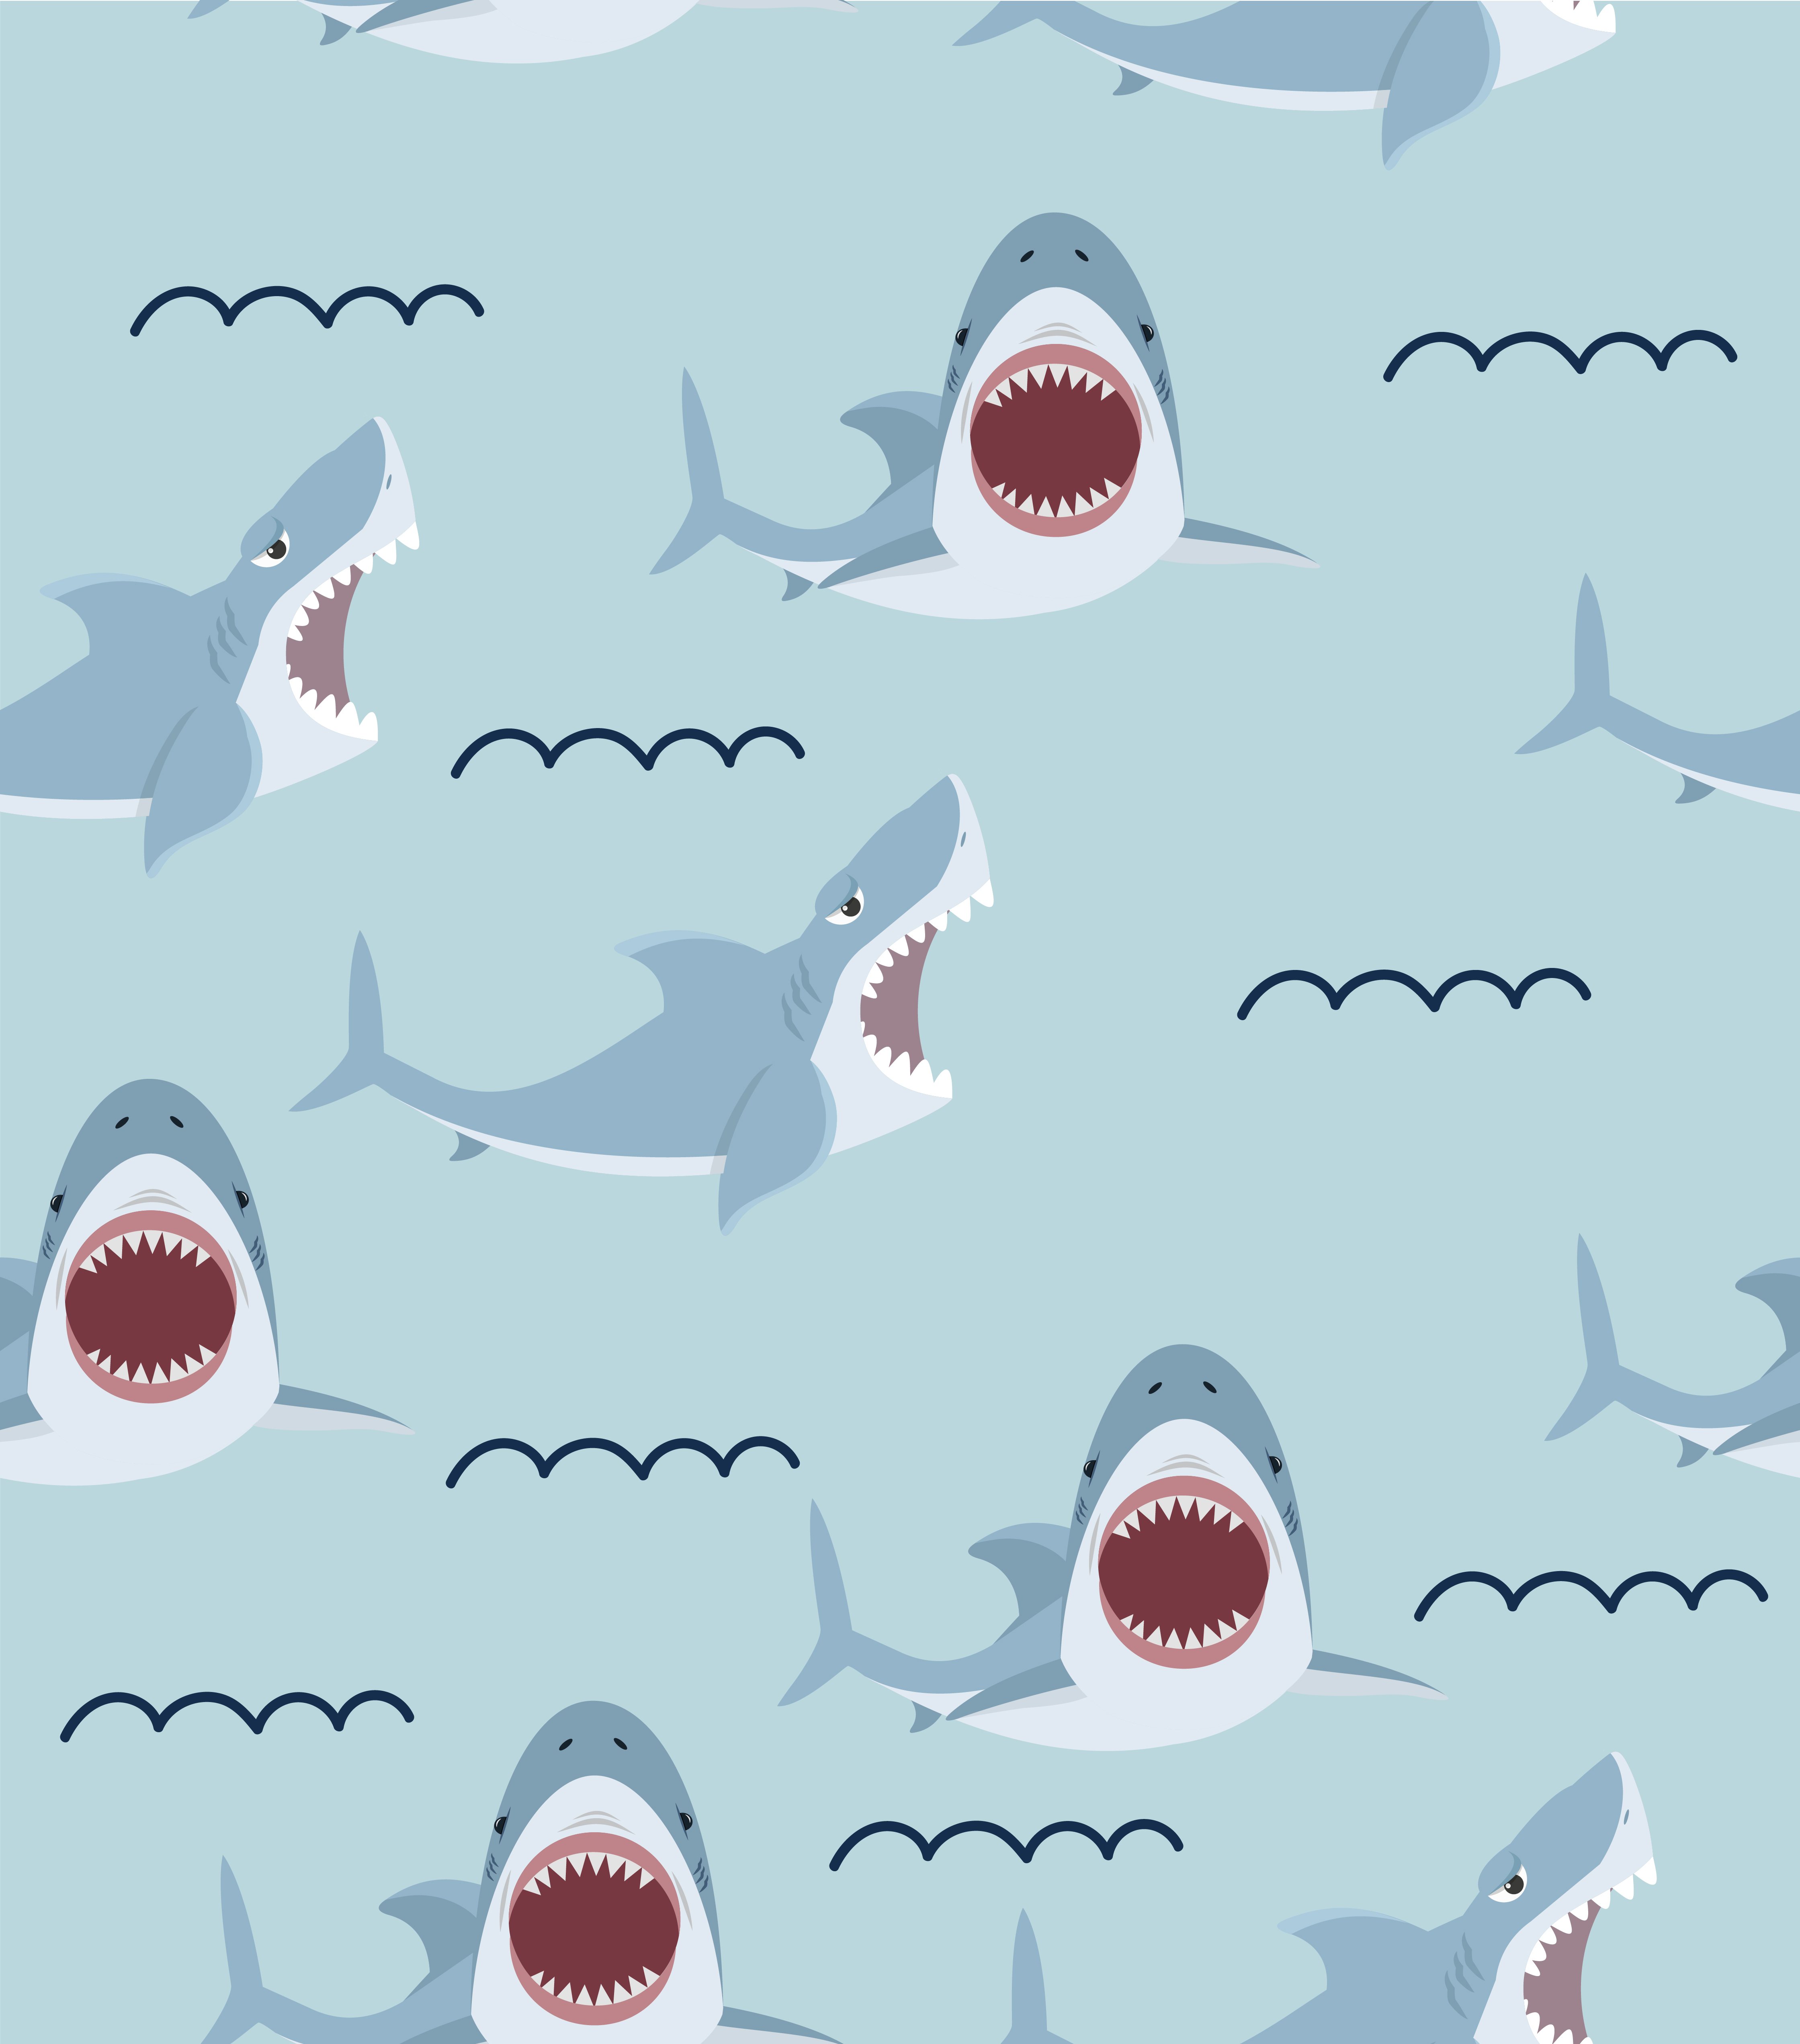 27965 Cute Shark Cartoon Images Stock Photos  Vectors  Shutterstock